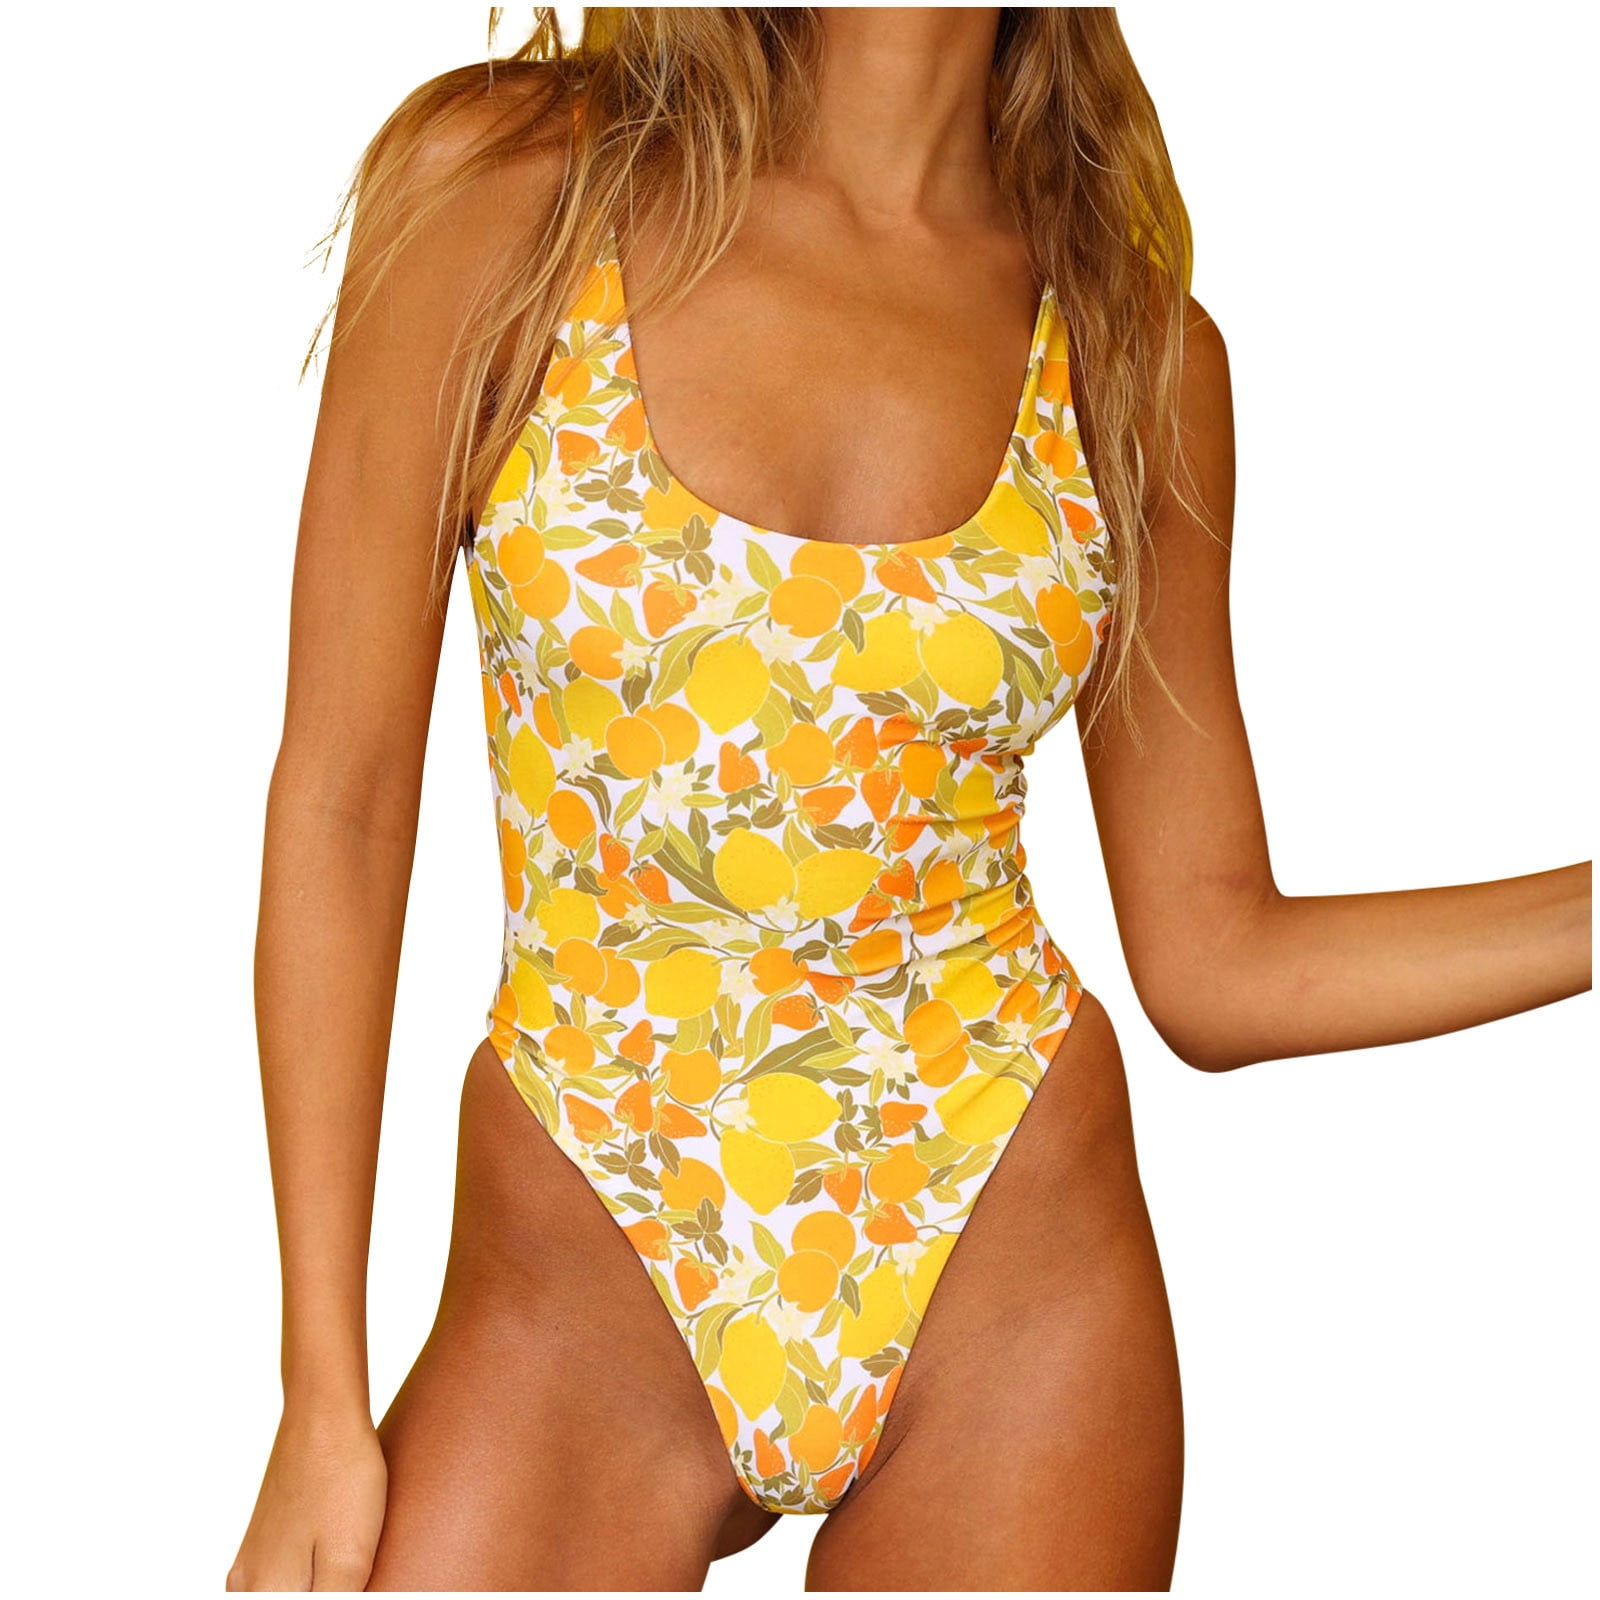 Buy Haute Sauce Yellow Cut Out Swimsuit for Women, Beachwear